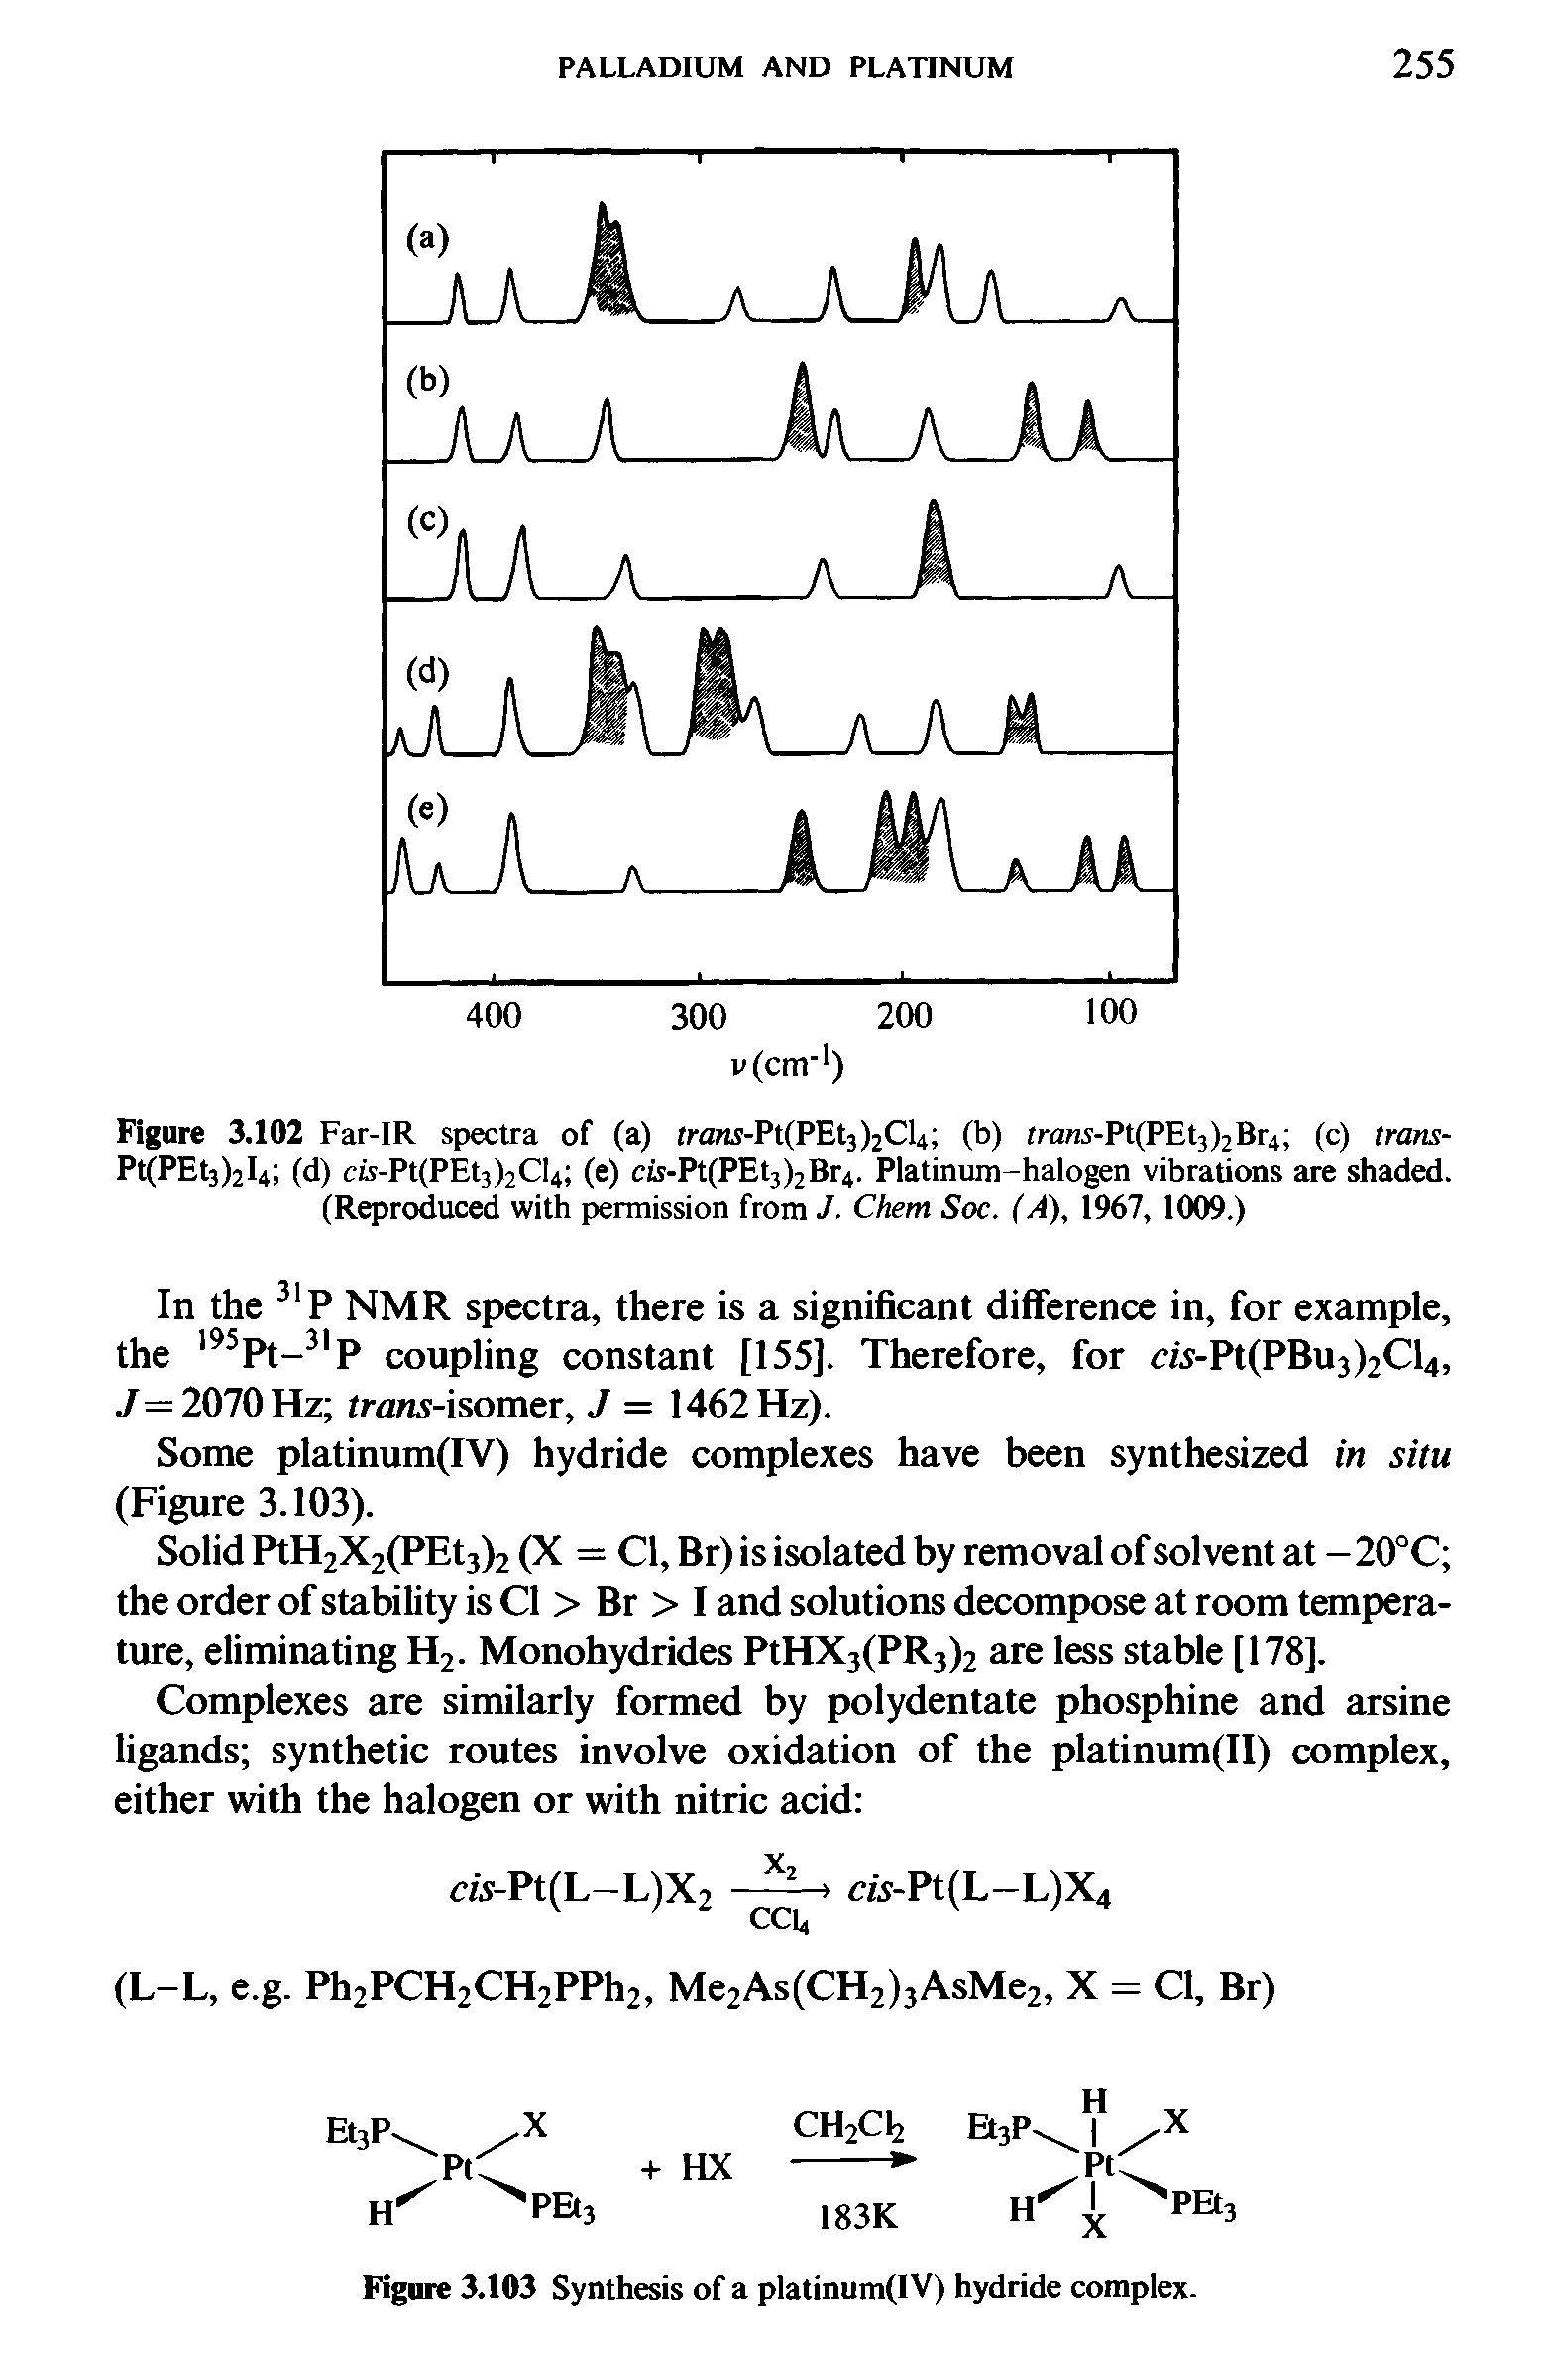 Figure 3.102 Far-IR spectra of (a) traris-Pt(PEt3 )2C14 (b) rram-Pt(PEt3)2Br4 (c) trans-Pt(PEt3)2l4 (d) cis-Pt(PEt3)2Cl4 (e) cis-Pt(PEt3)2Br4. Platinum-halogen vibrations are shaded.